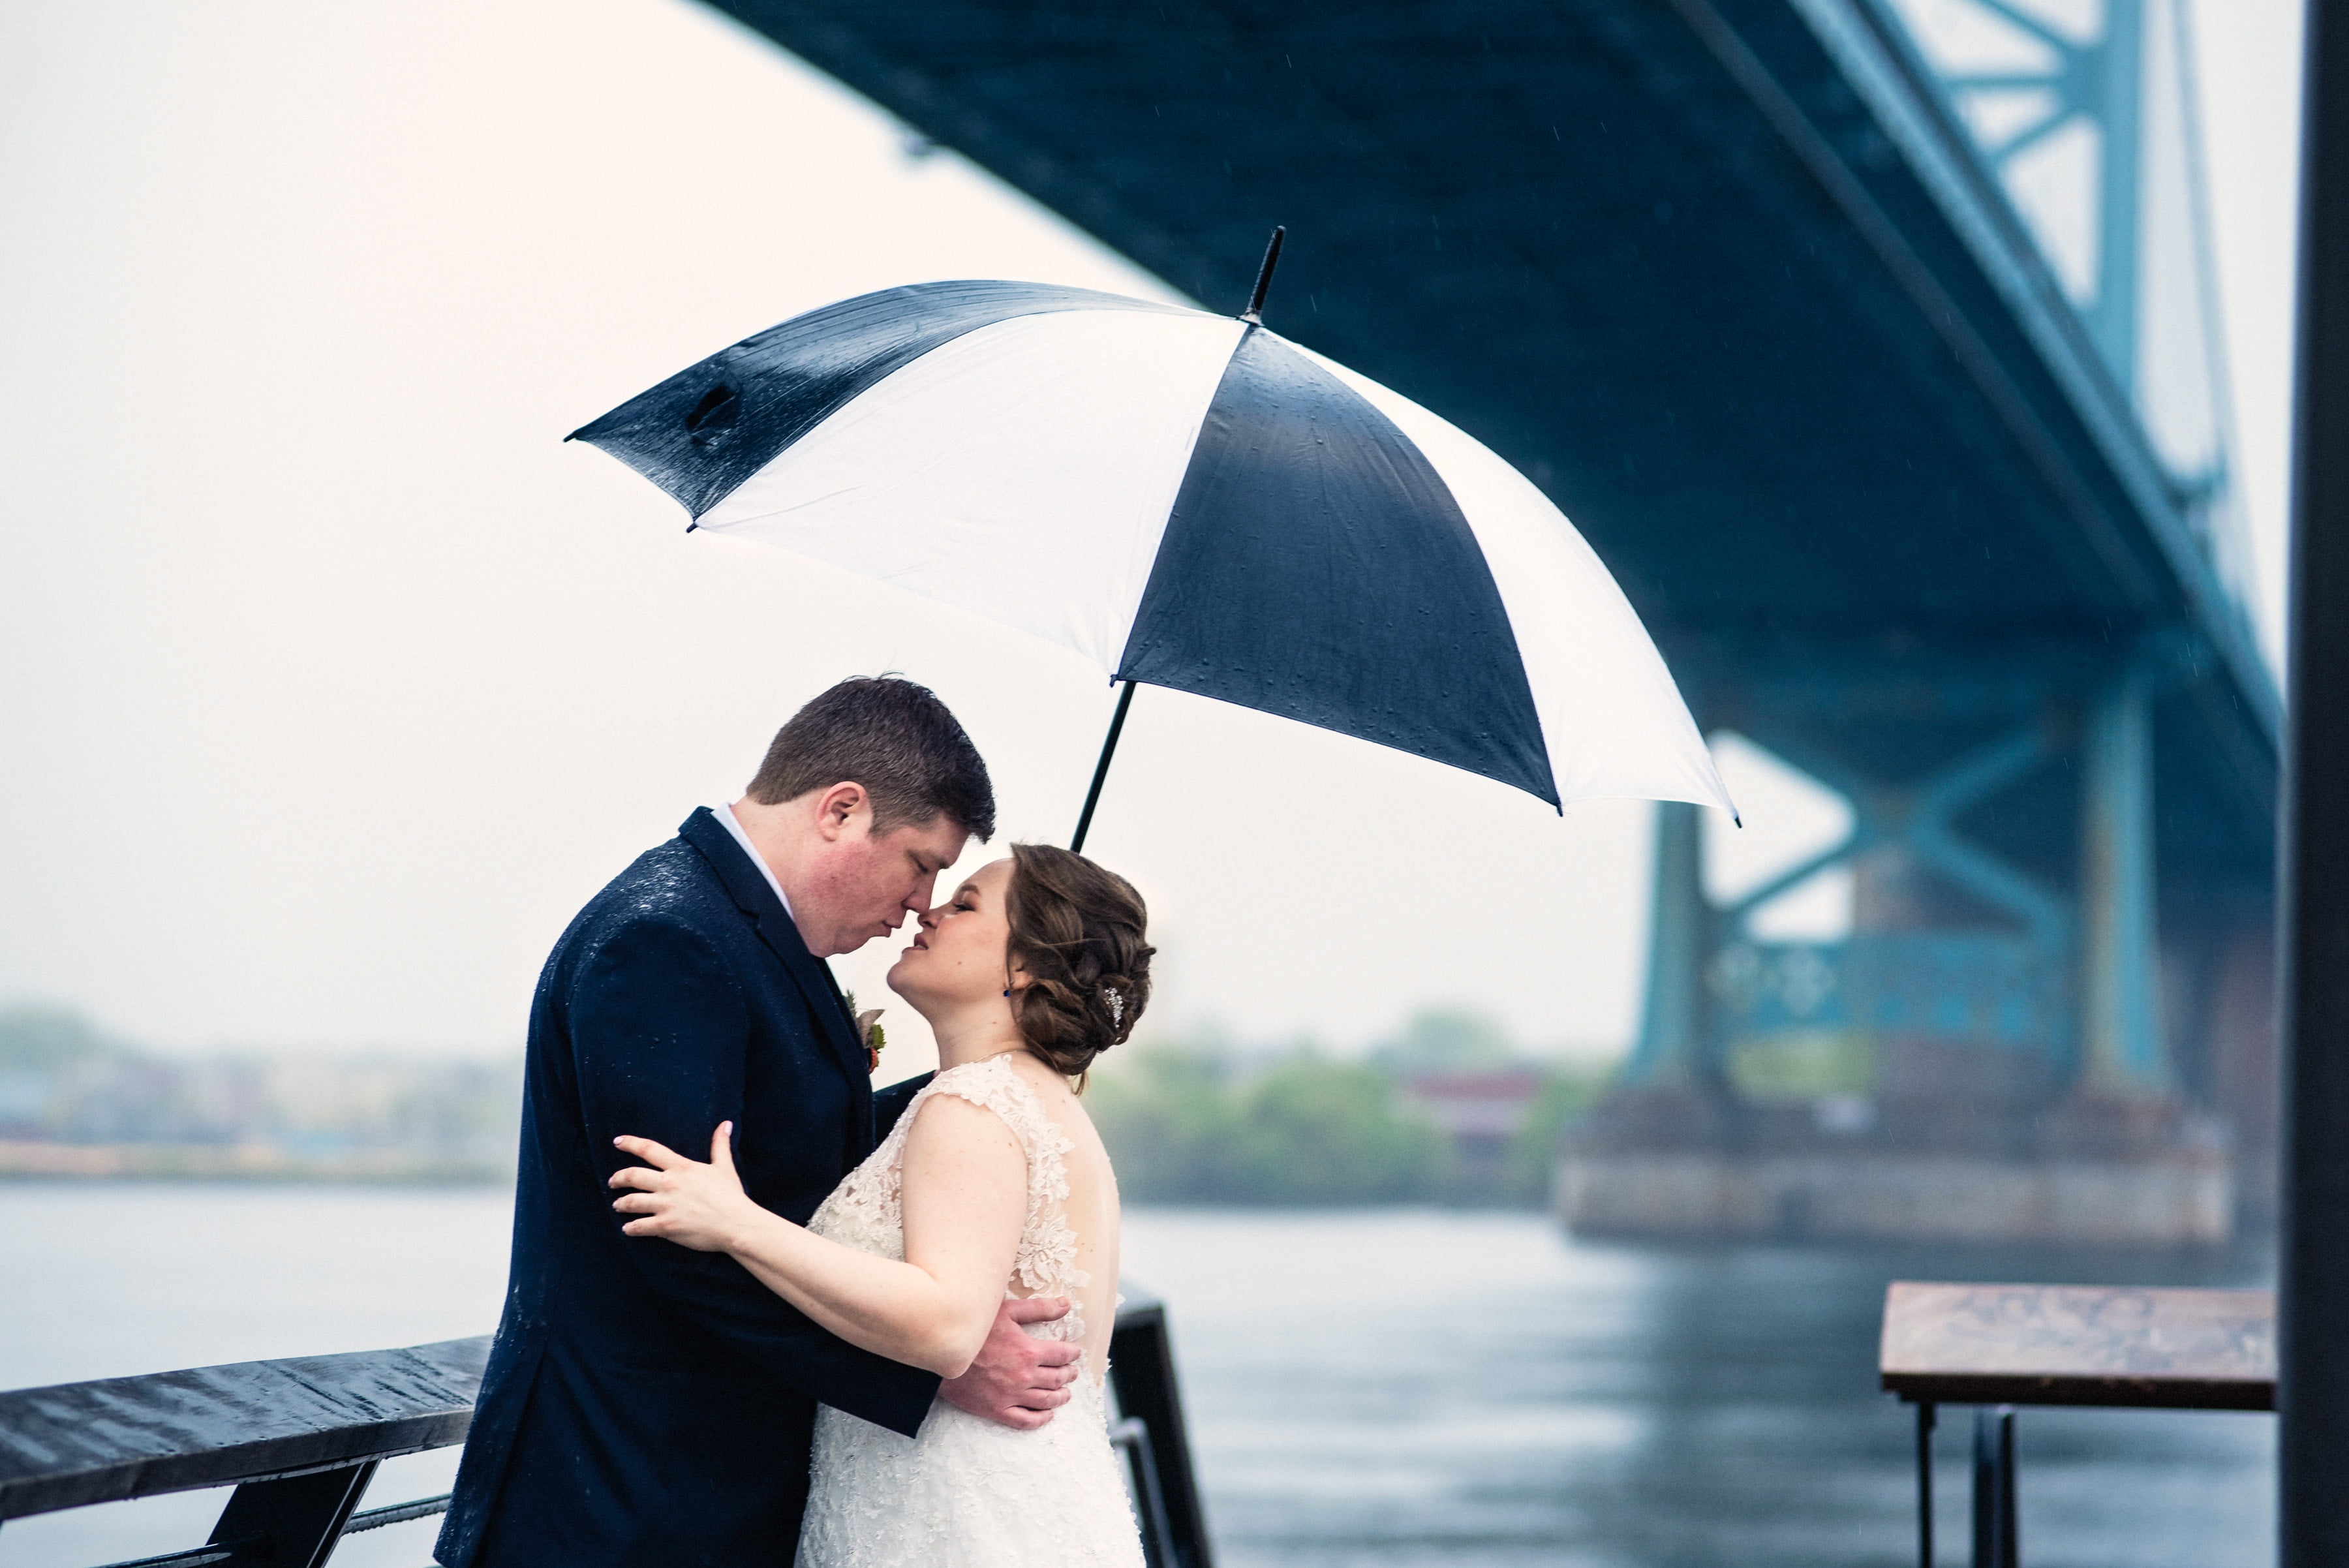 Rainy wedding days